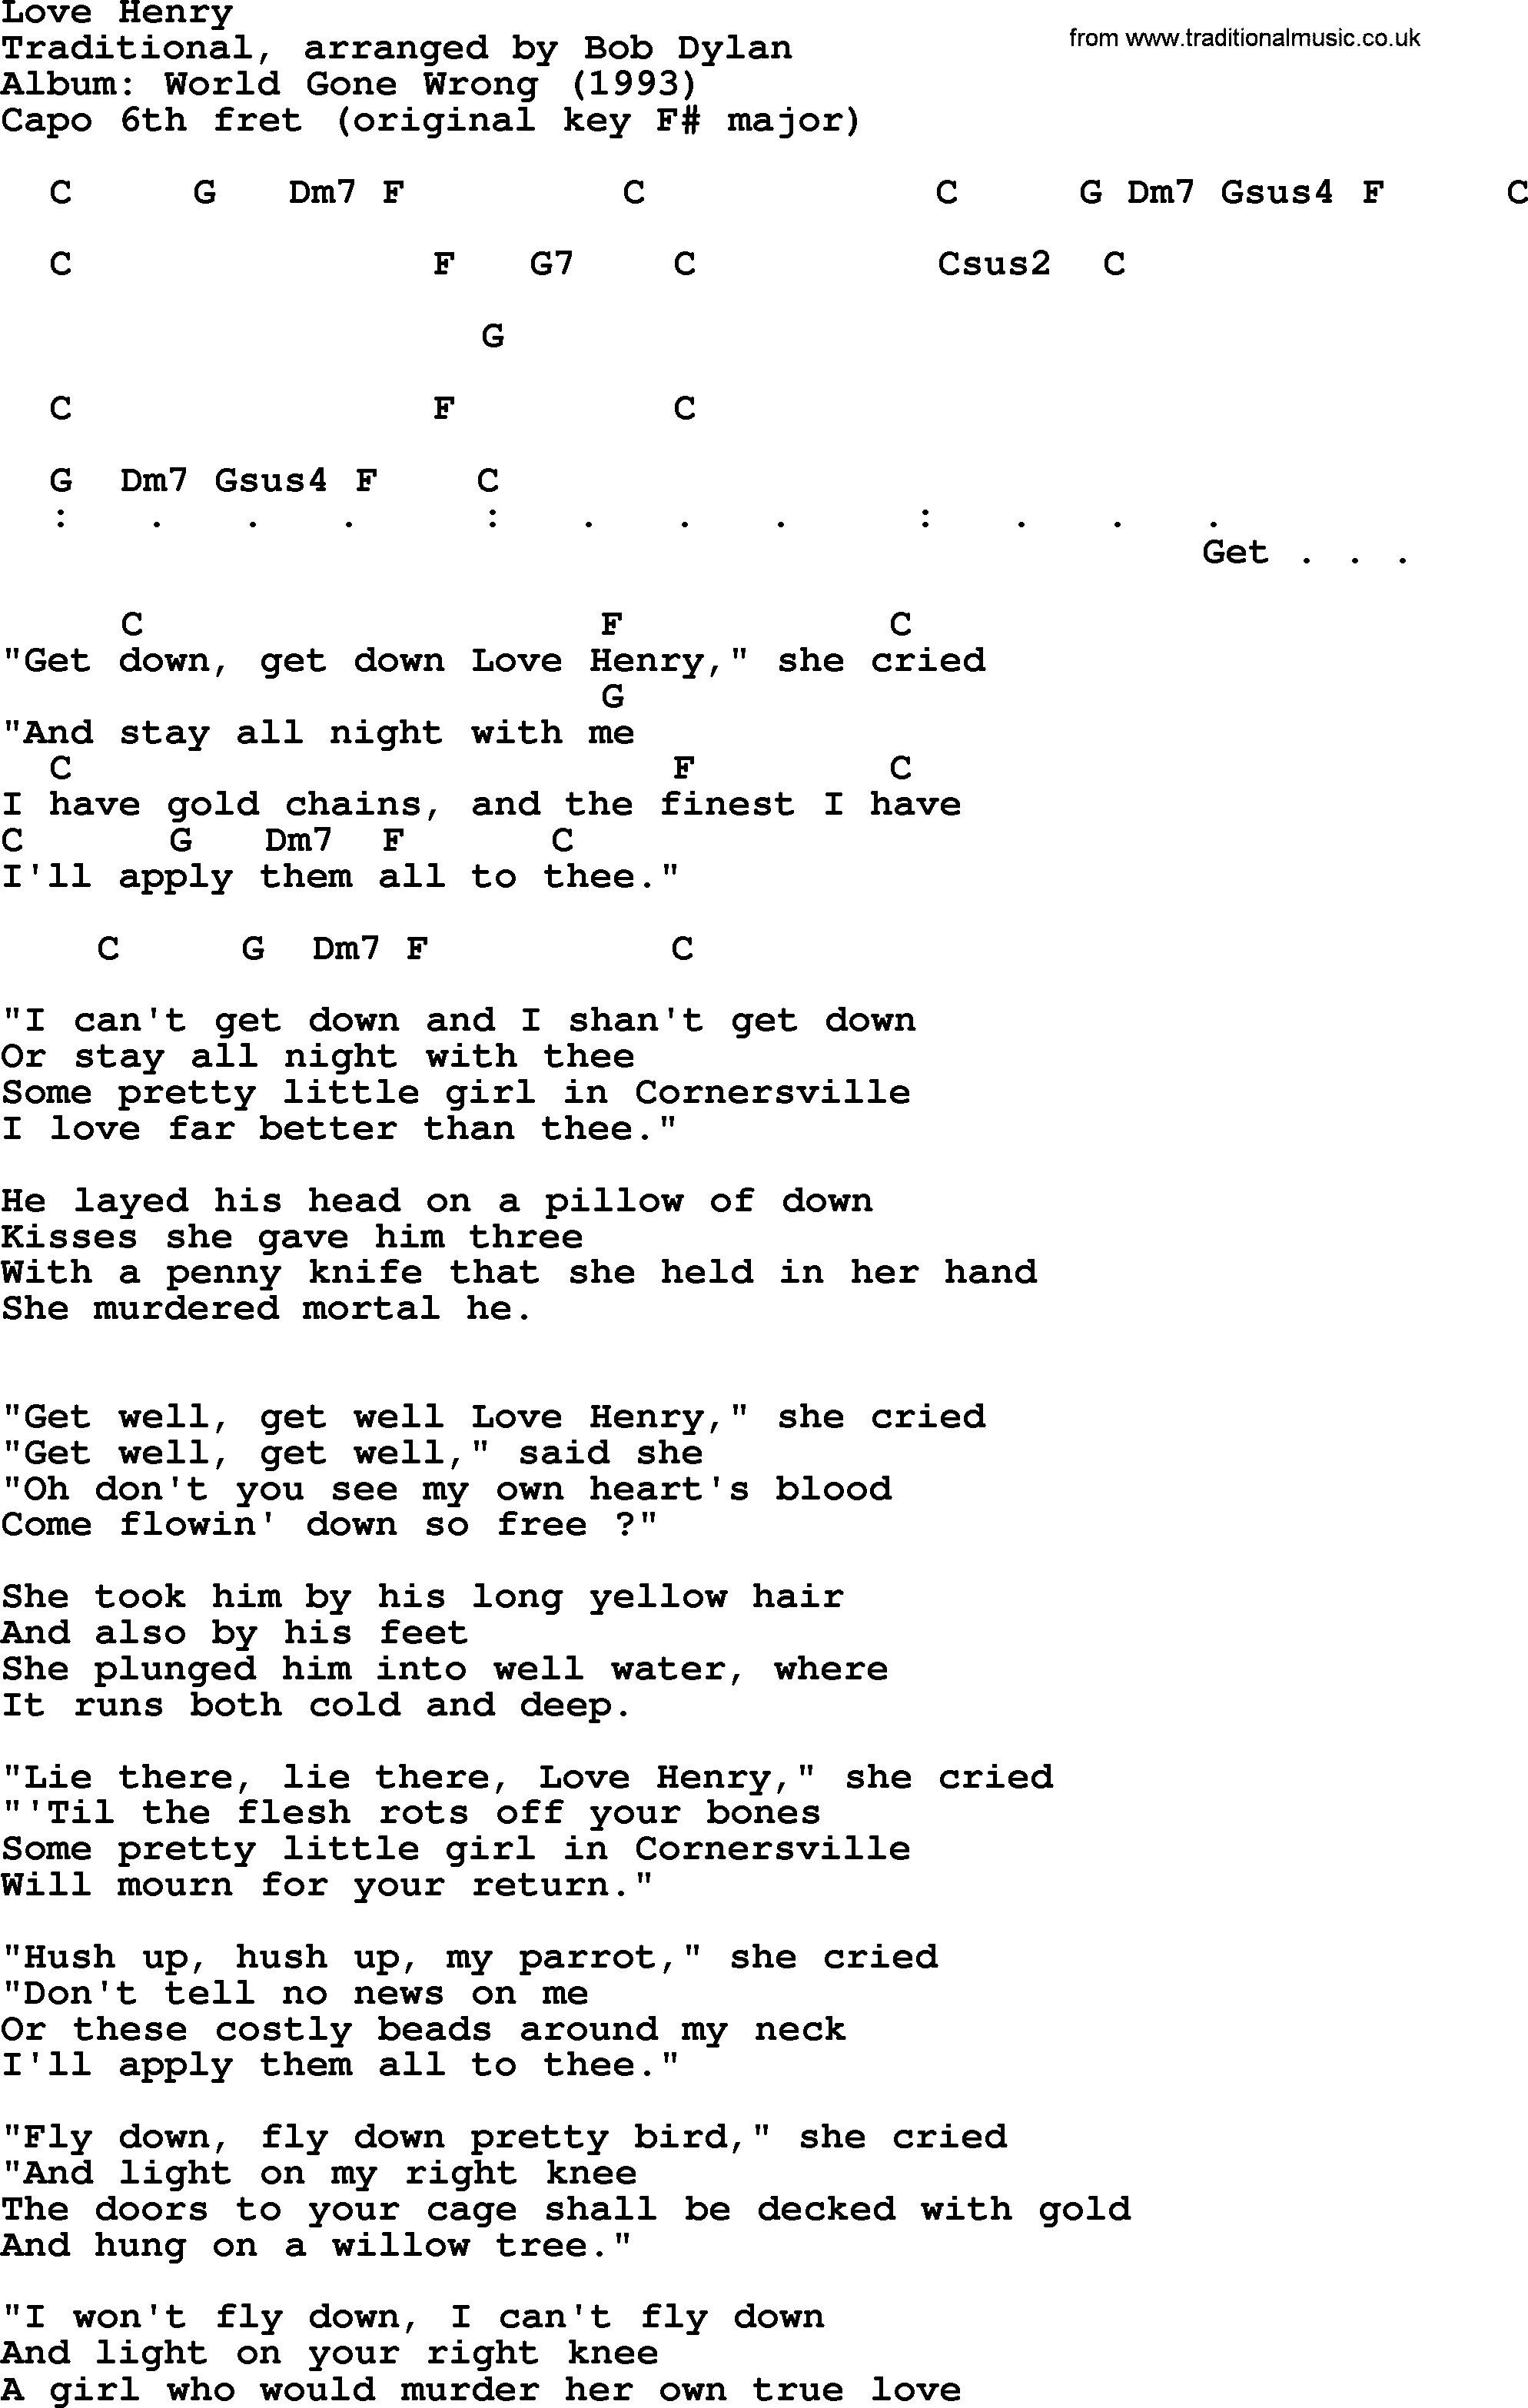 Bob Dylan song, lyrics with chords - Love Henry